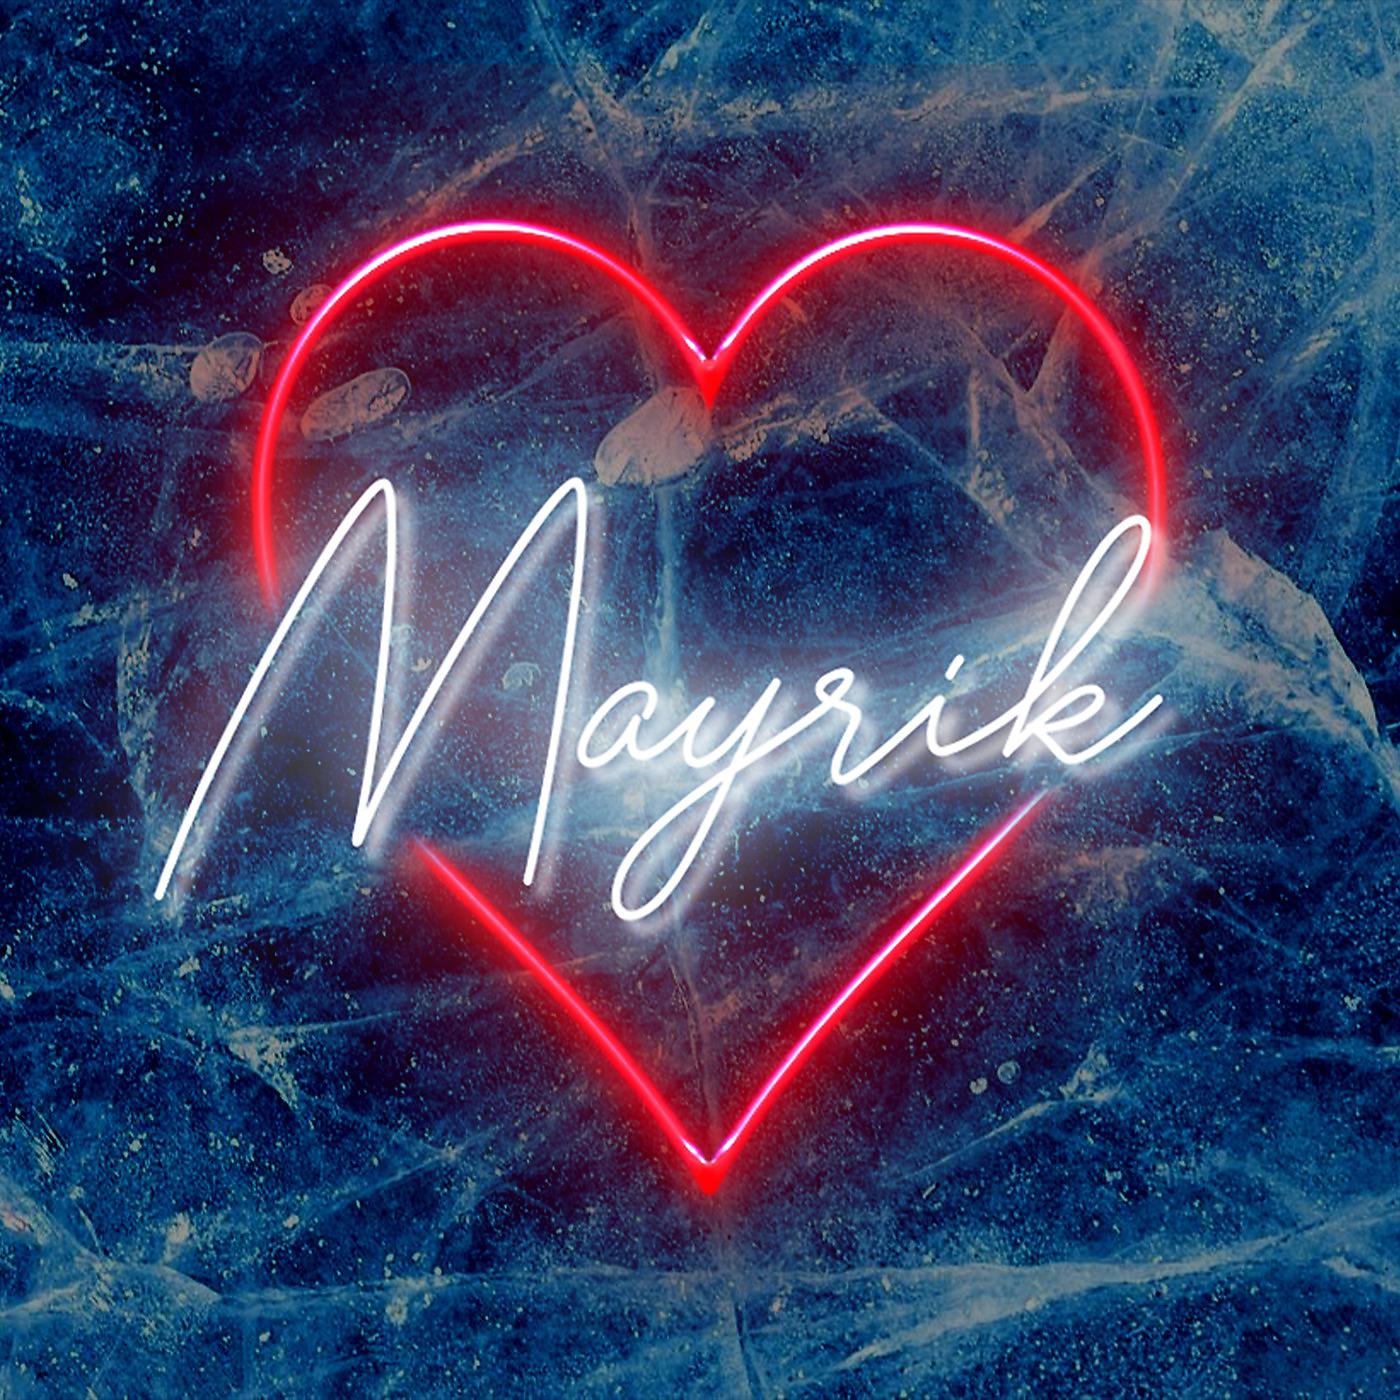 Постер альбома Mayrik